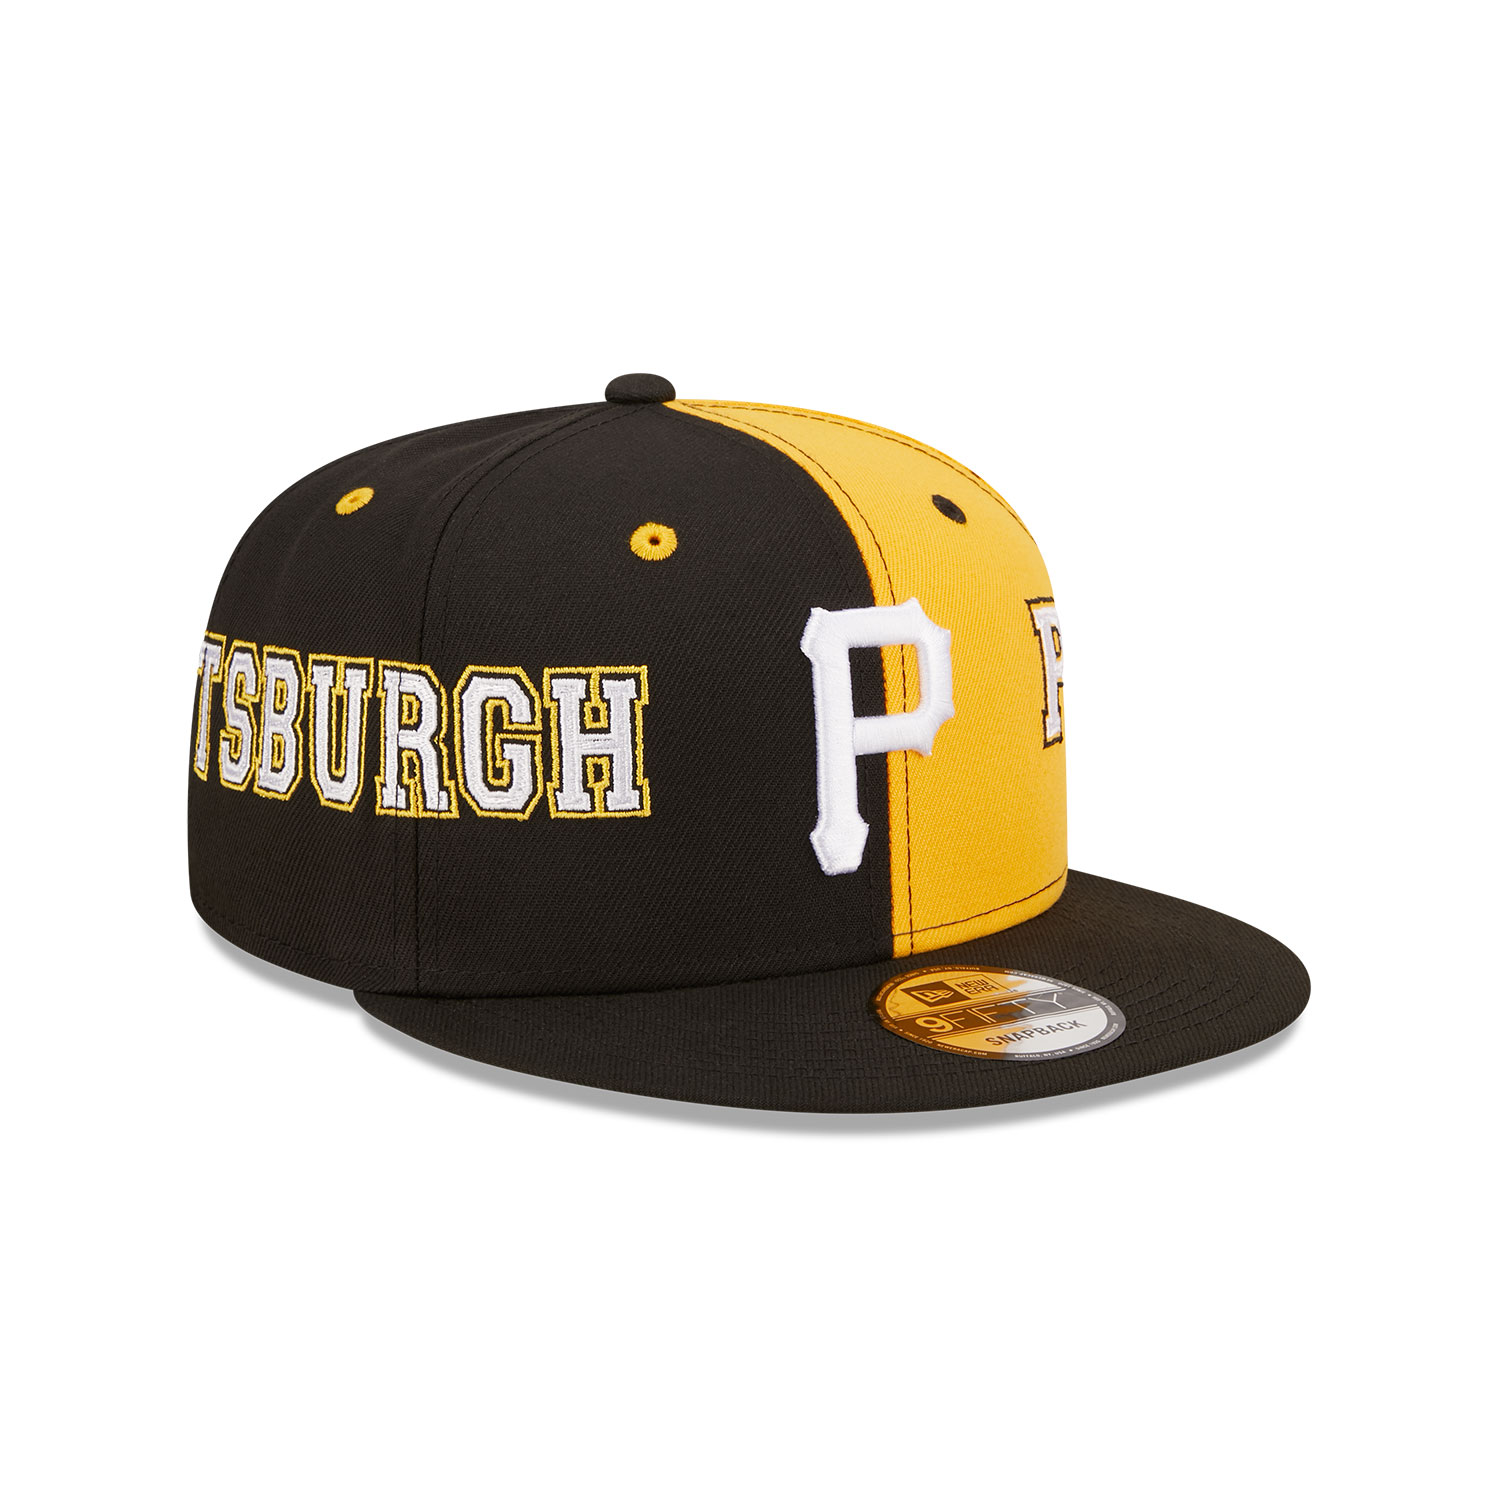 Pittsburgh Pirates Teamsplit Black 9FIFTY Snapback Cap